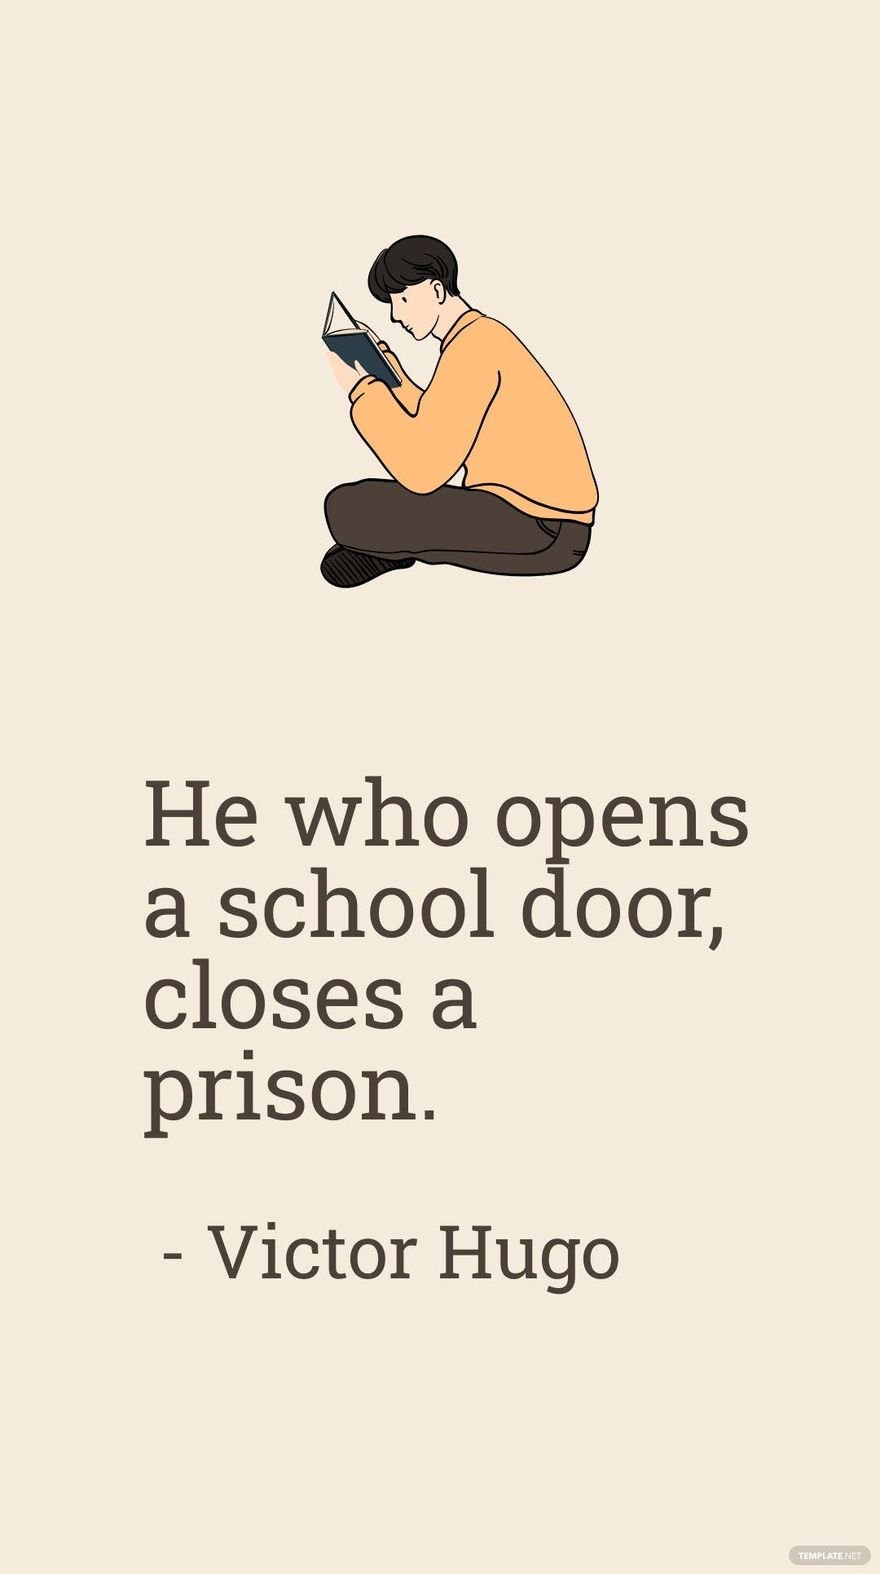 Victor Hugo - He who opens a school door, closes a prison.